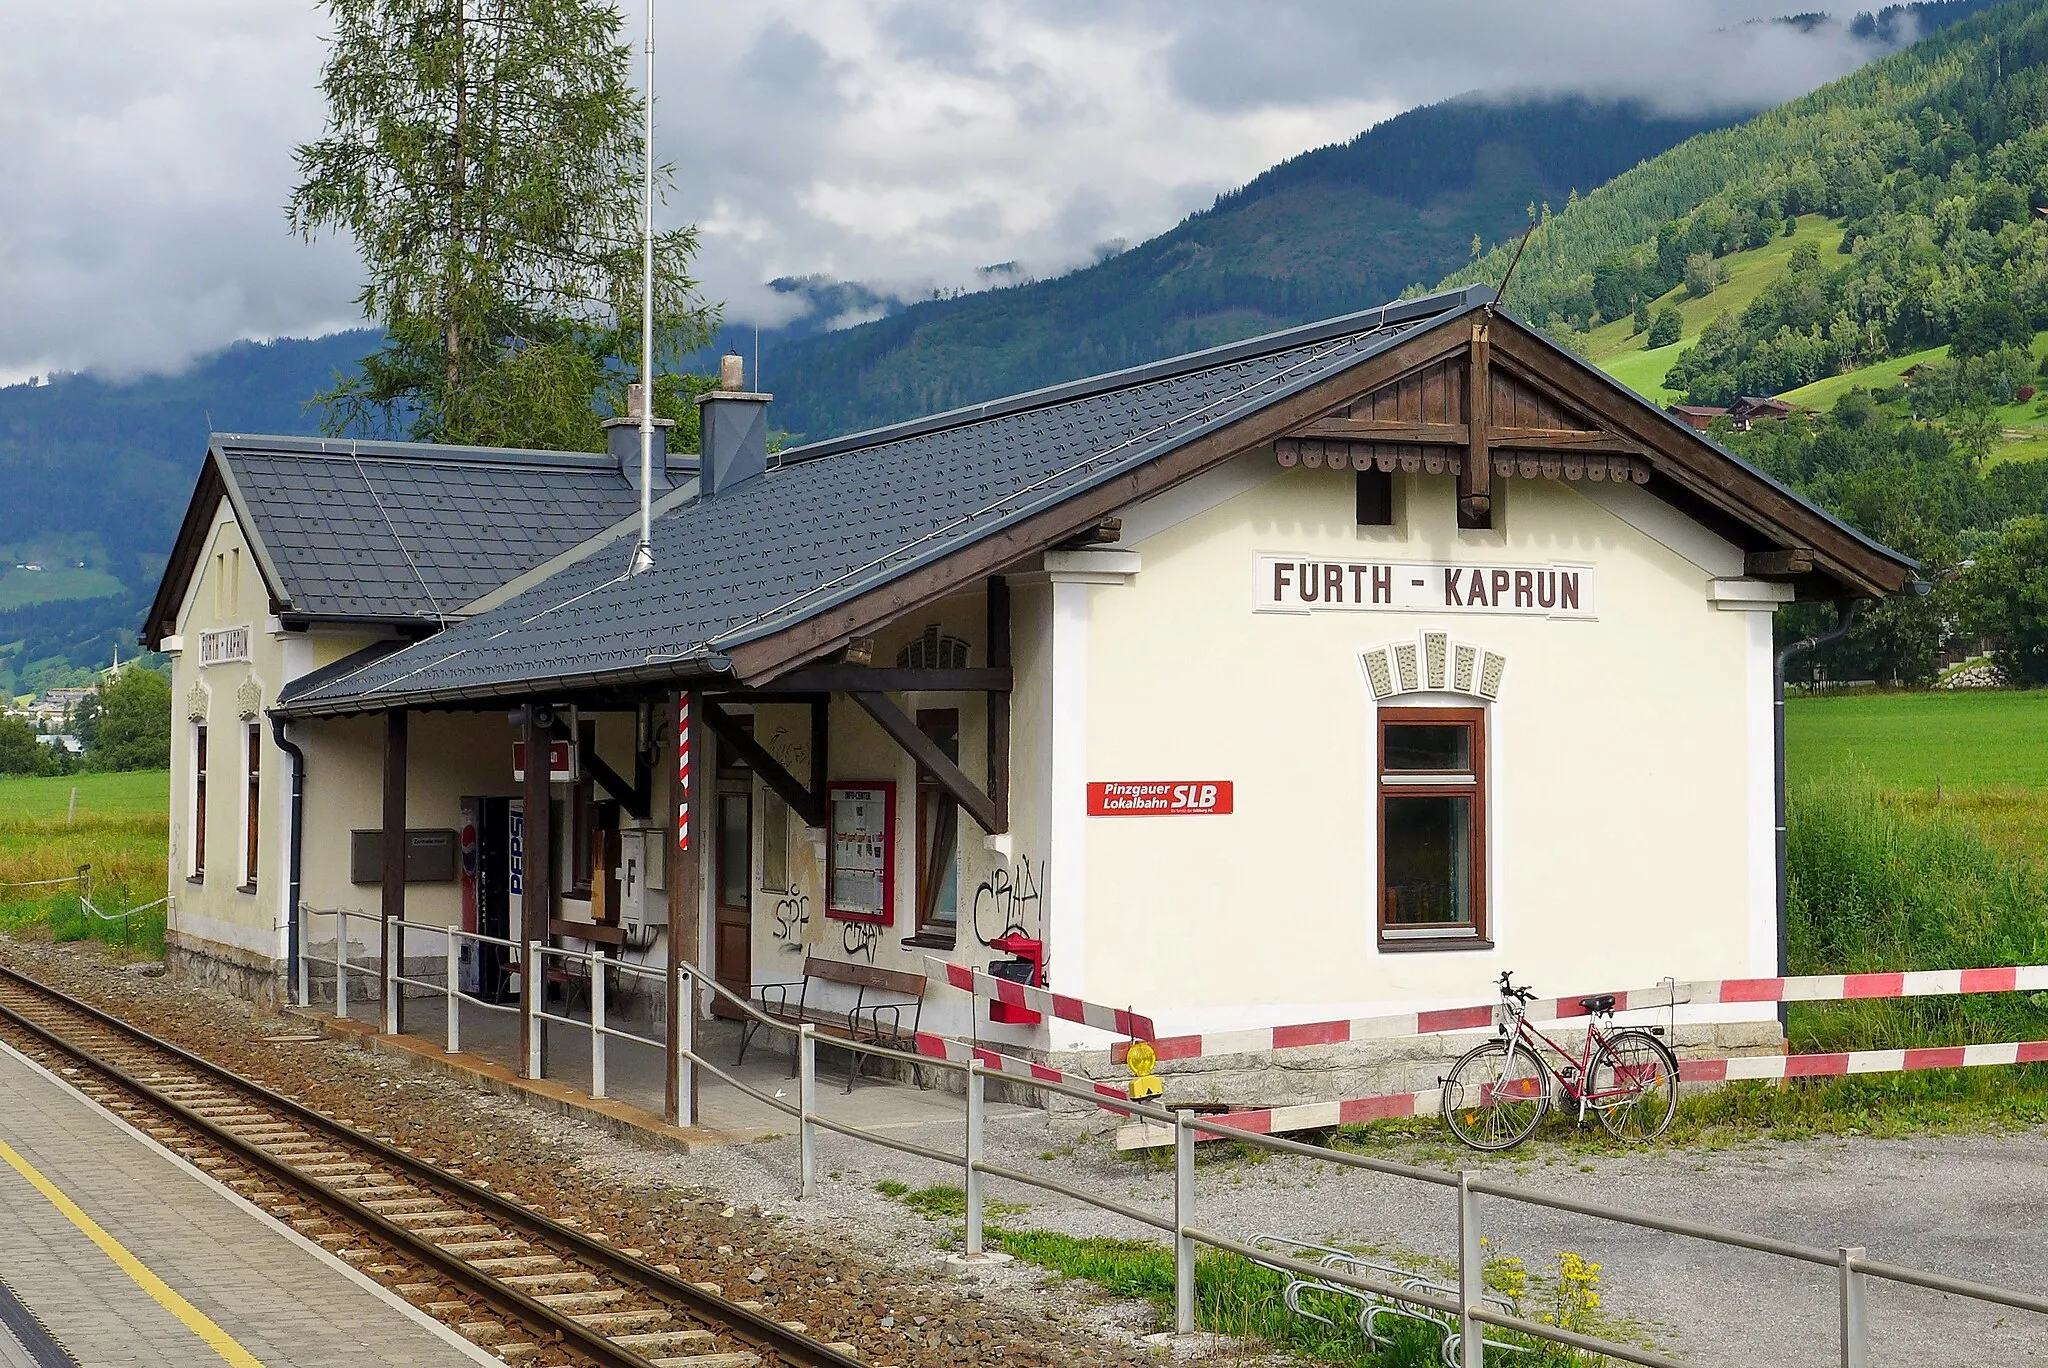 Photo showing: View of the station building at Fürth-Kaprun railway station, Austria.